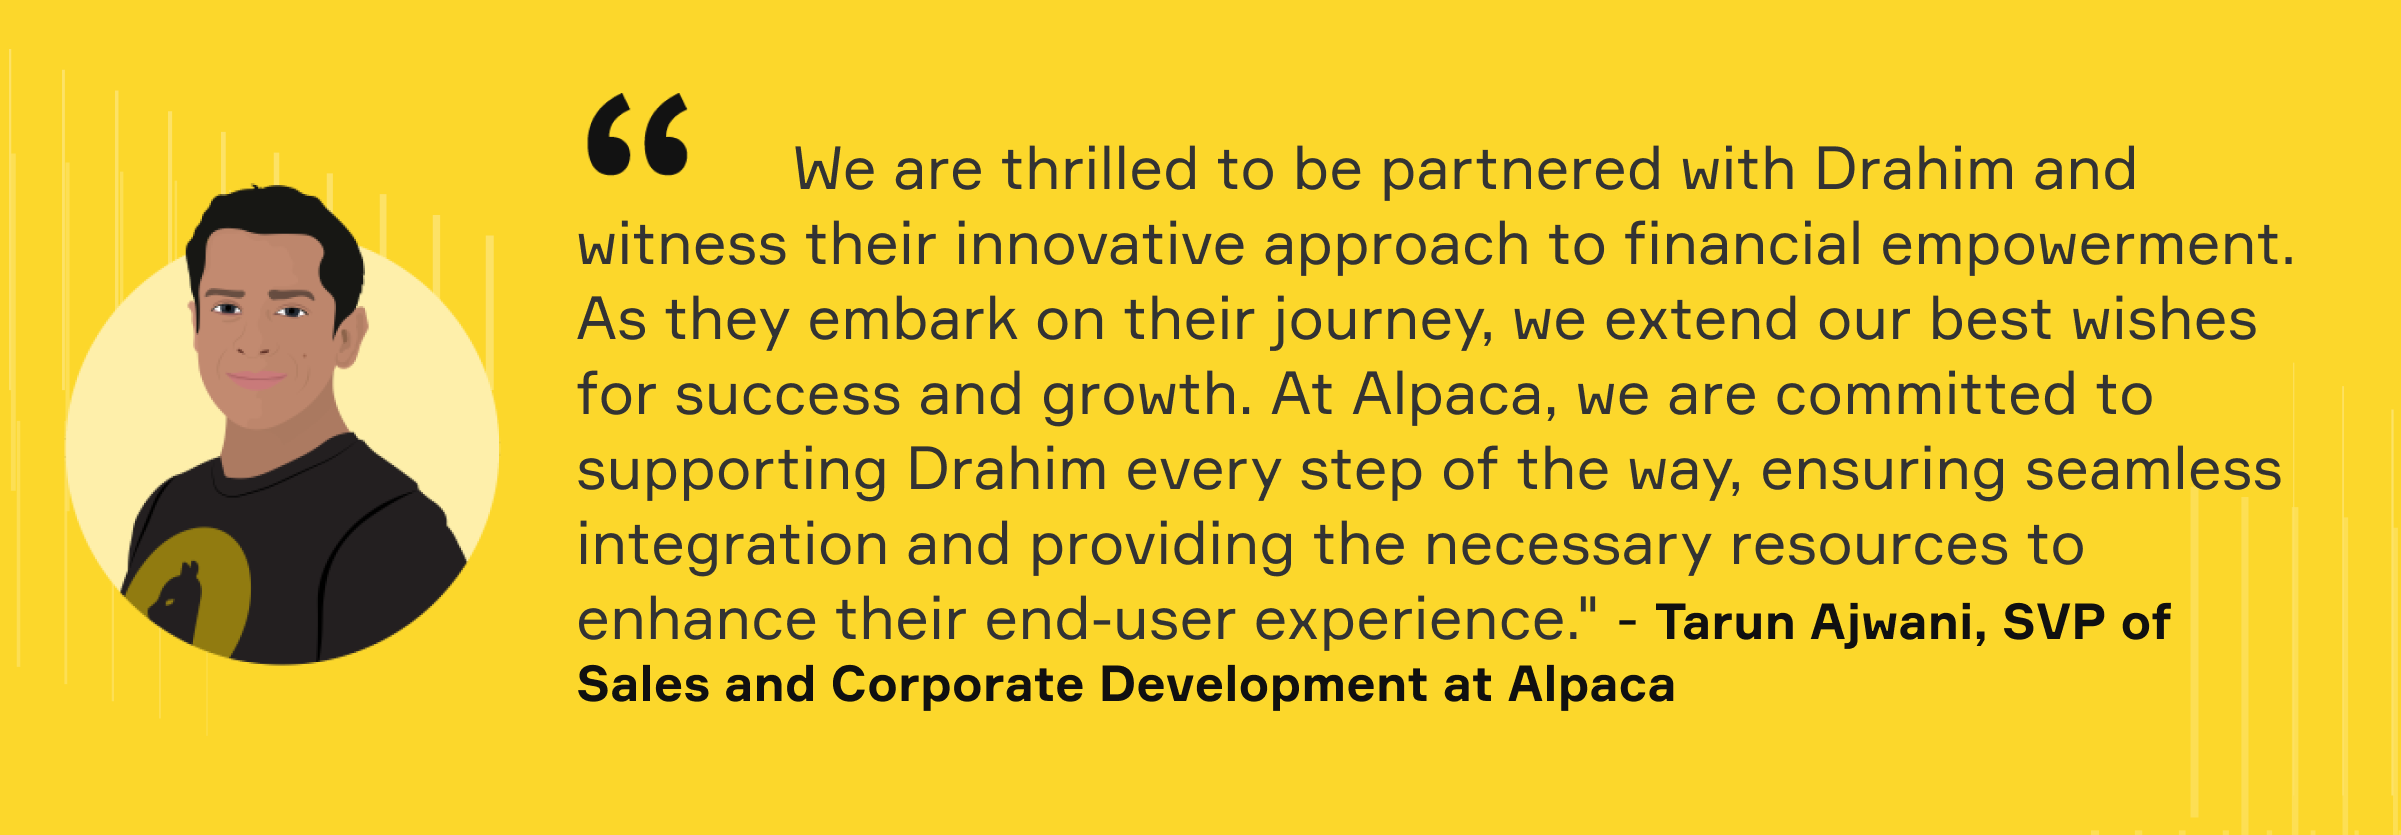 Drahim App Investments Partners with Alpaca to Transform Financial Management for Saudi Arabian Investors